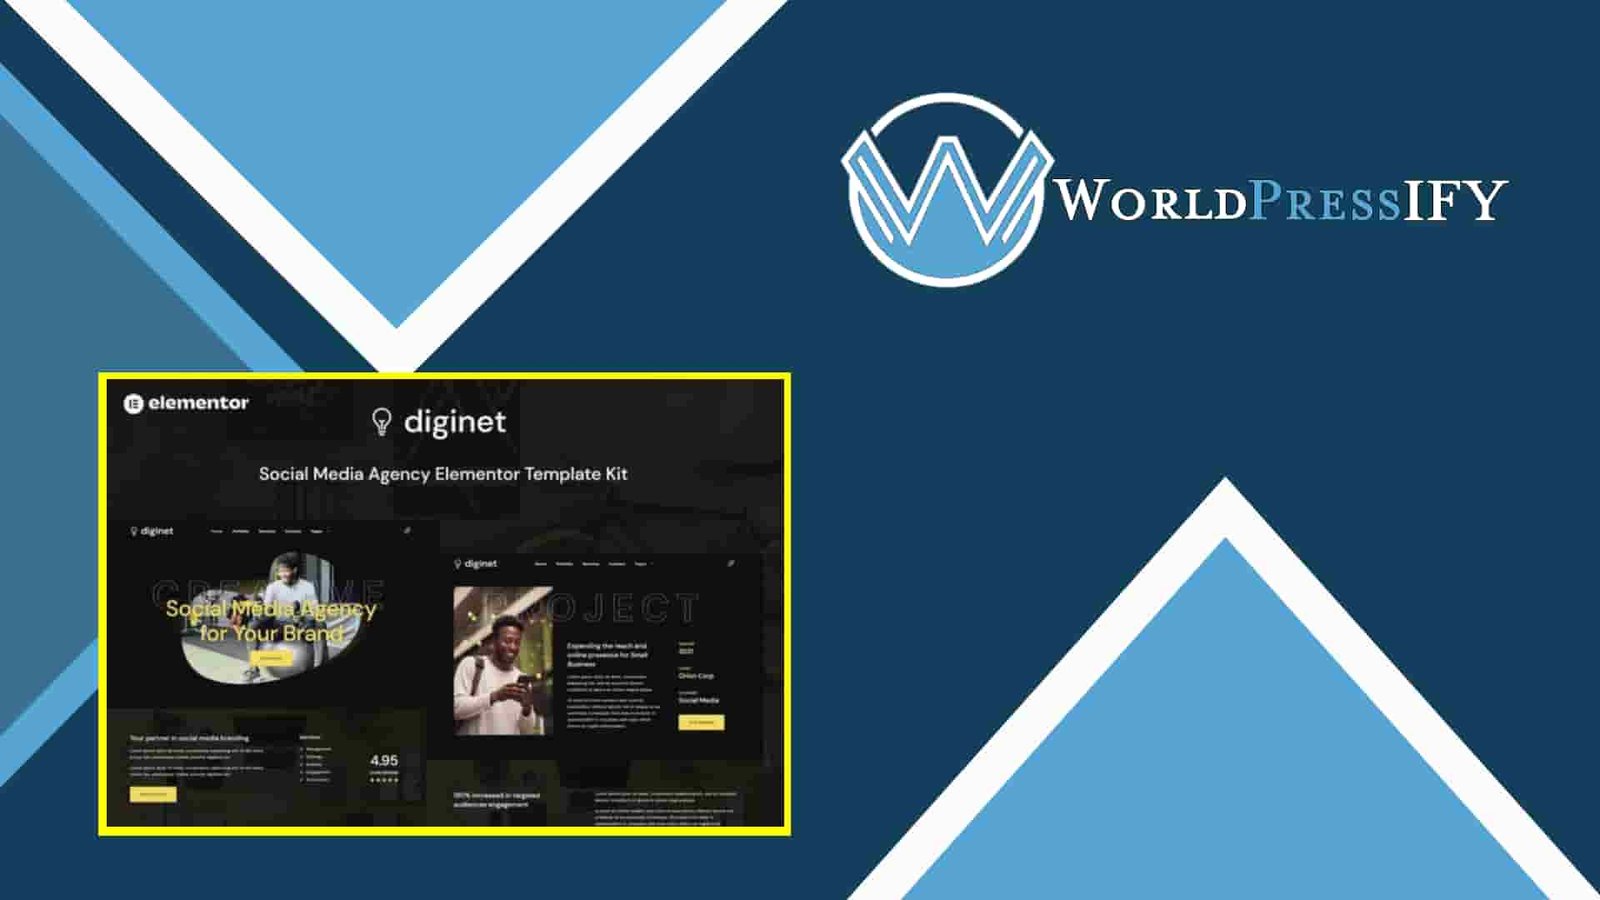 Diginet - Social Media Marketing Agency Elementor Template Kit - WorldPress IFY